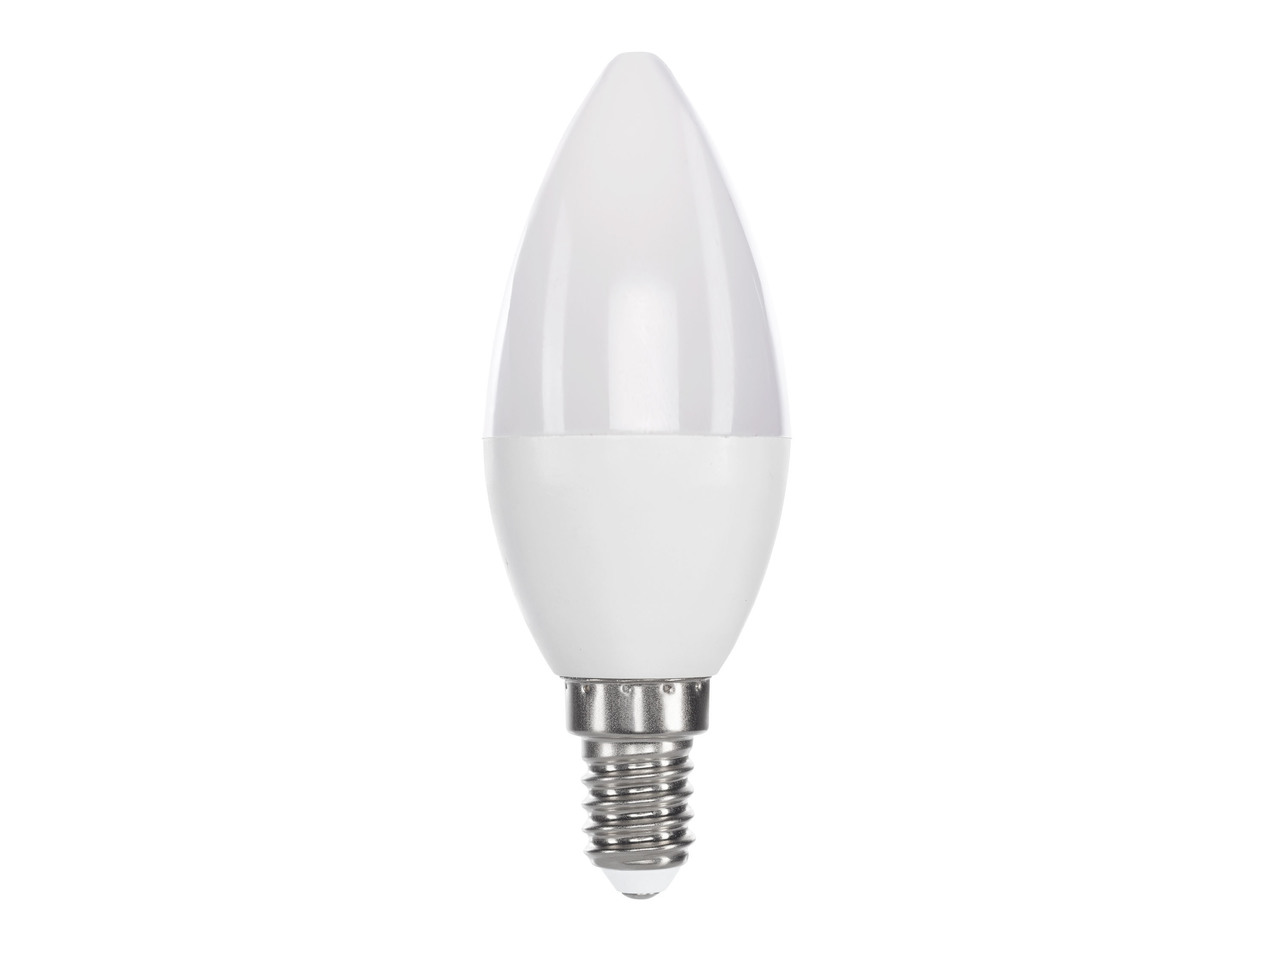 LED Light Bulb or Spot, Dimmable